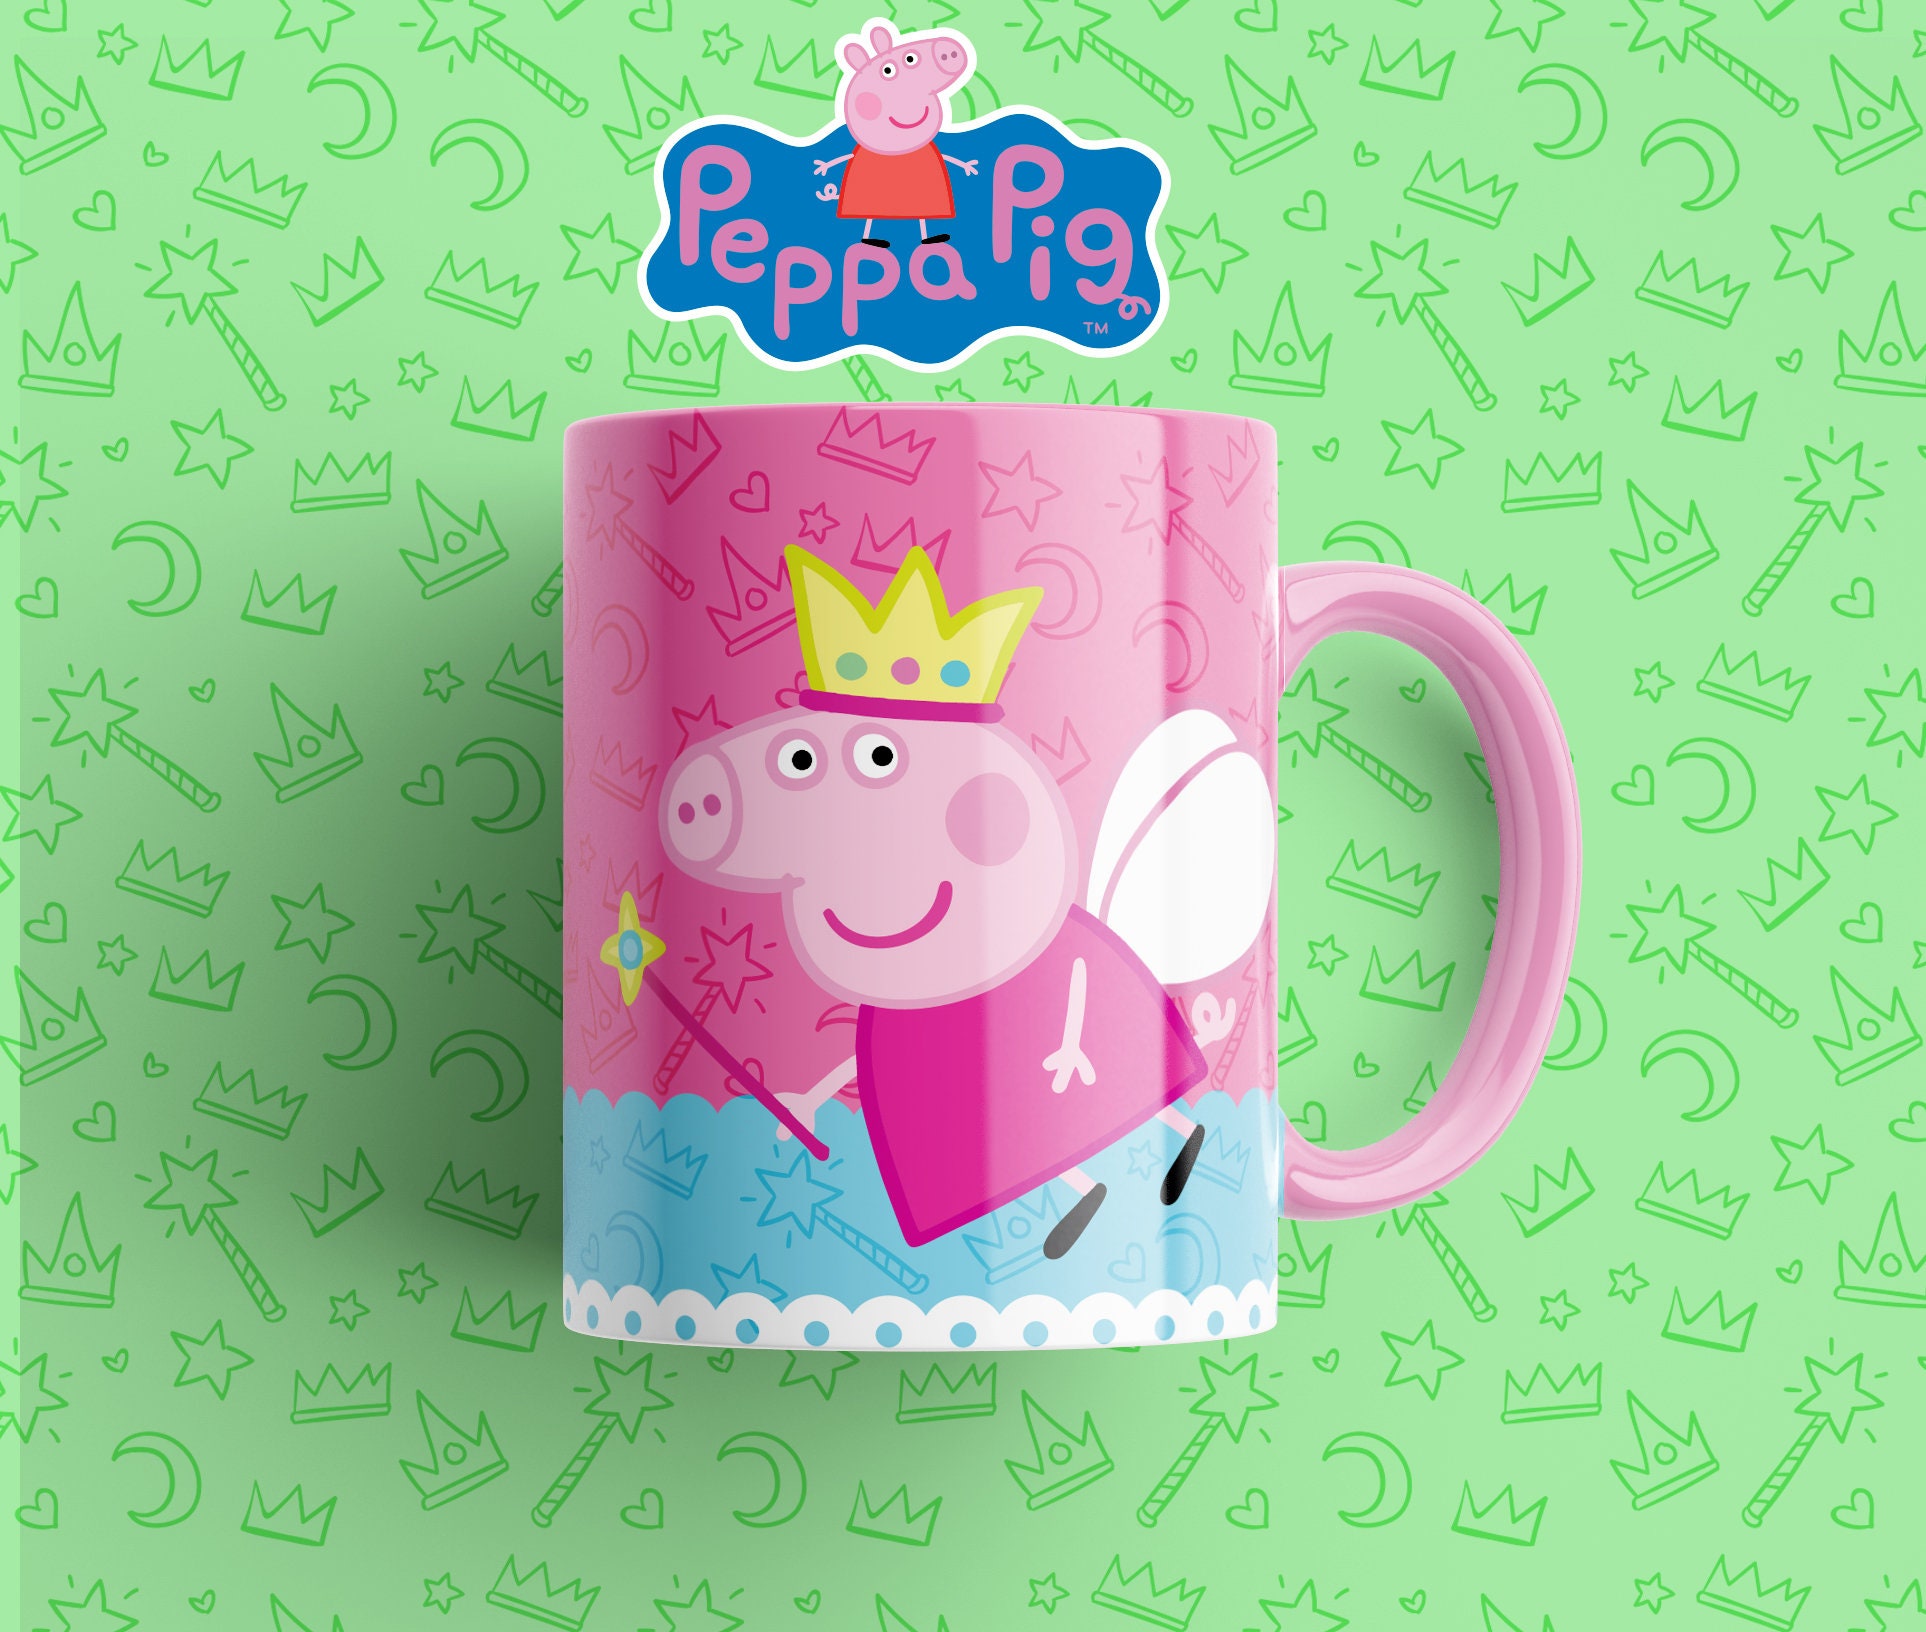 Peppa Pig Family Photo 11 oz Ceramic Mug Peppa Pig Family Photo